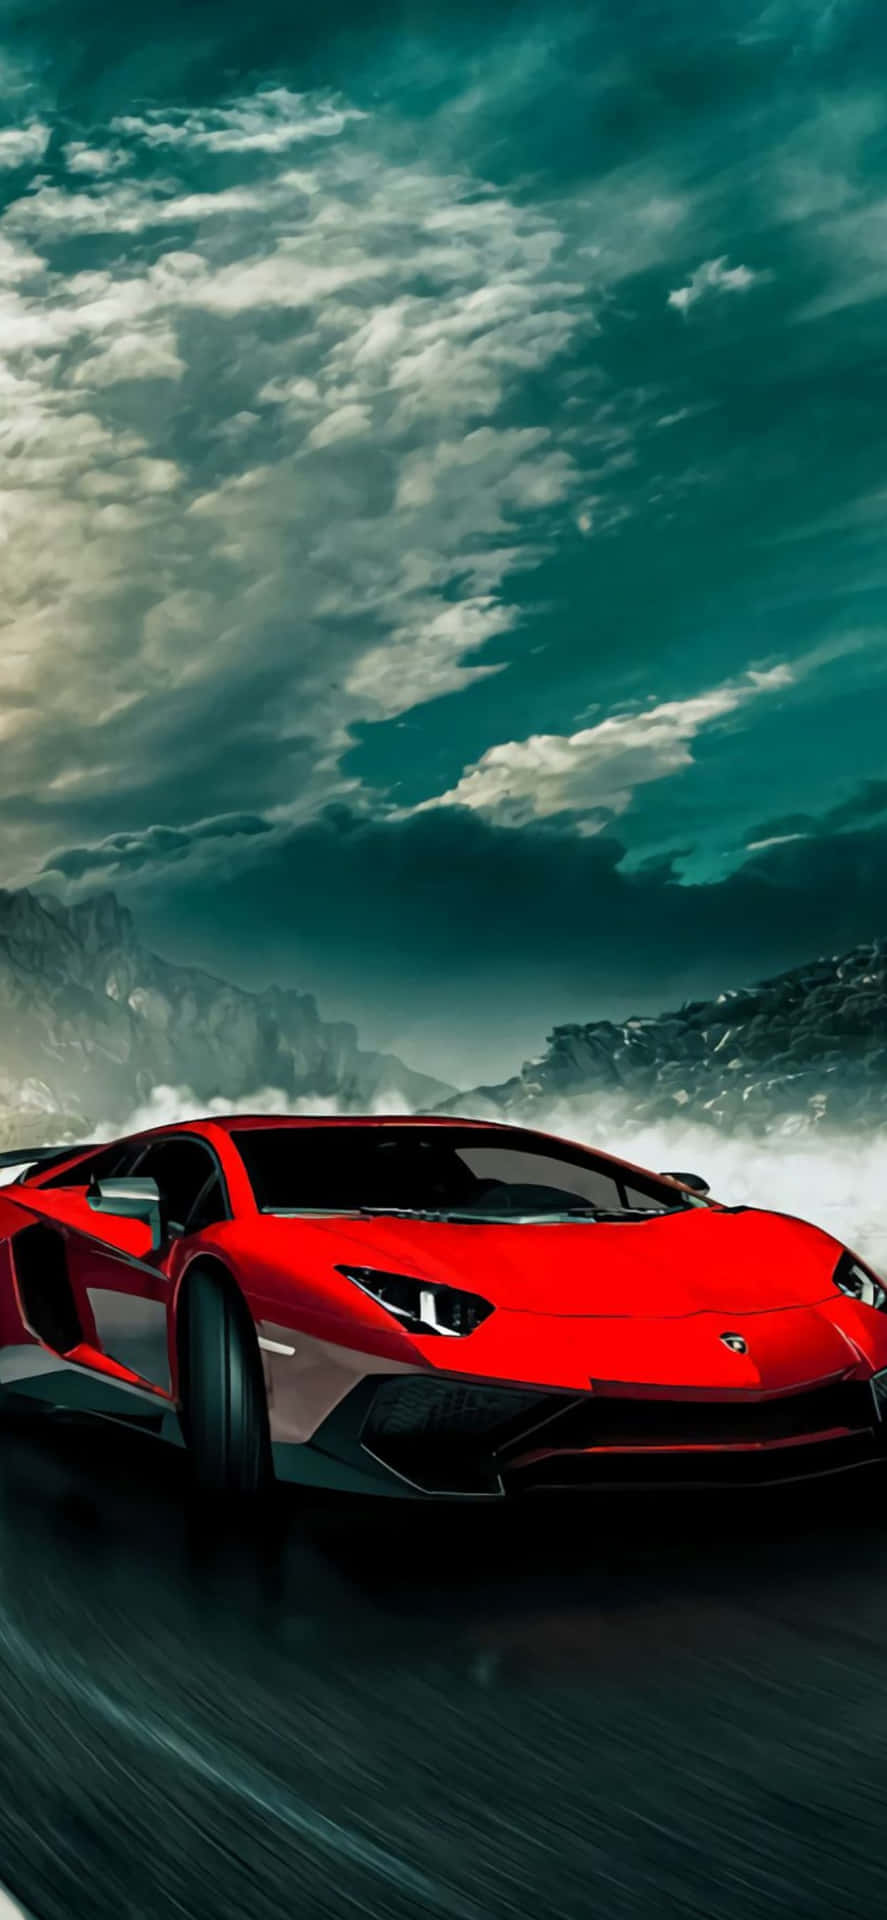 iPhone XS Max Lamborghini Red Aventador Background